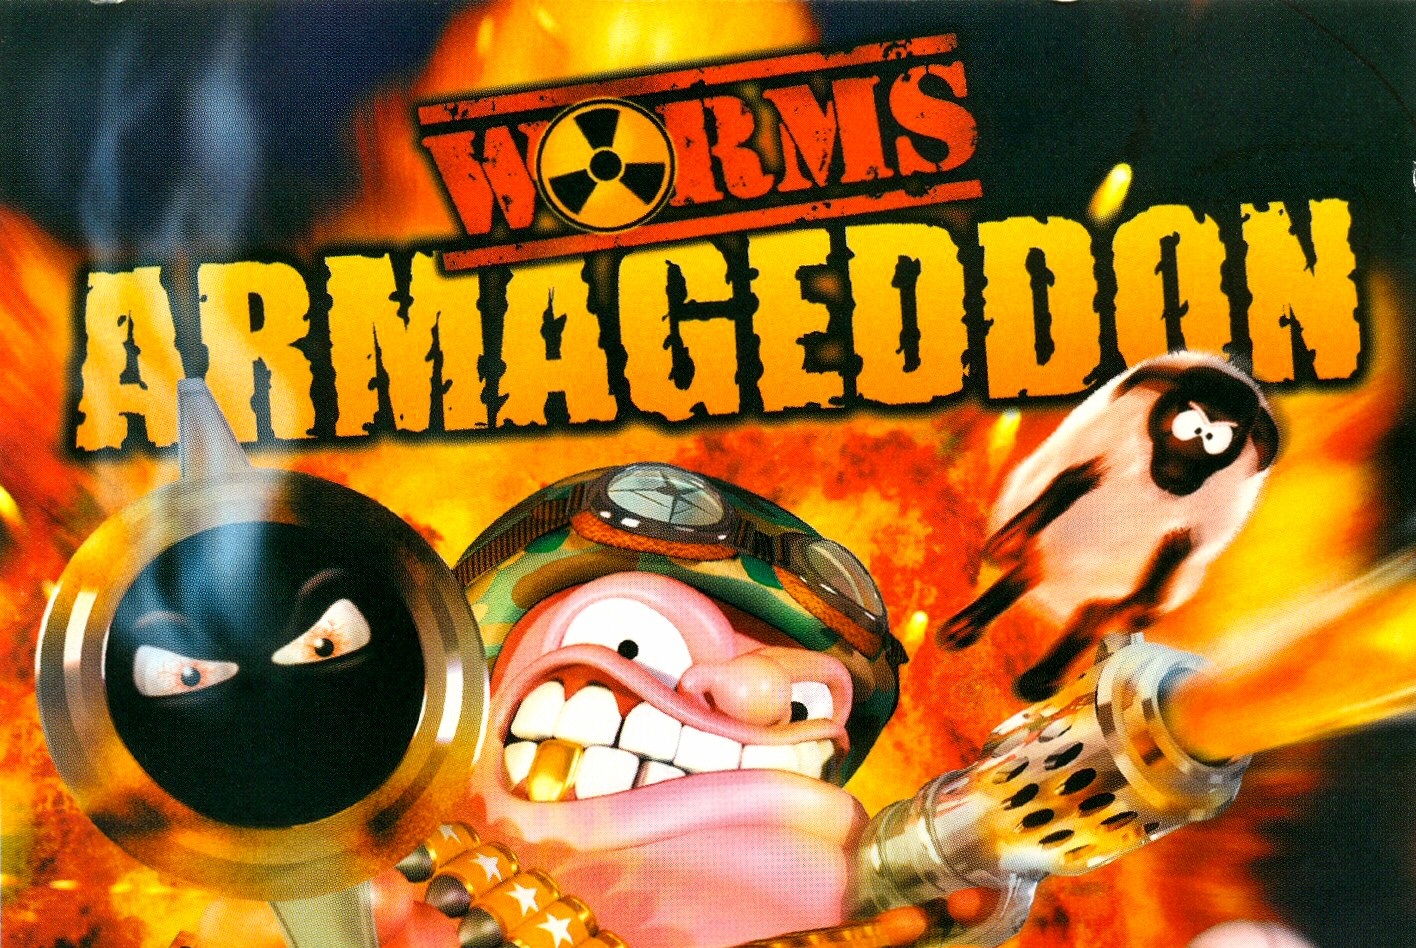 worms armageddon download pc